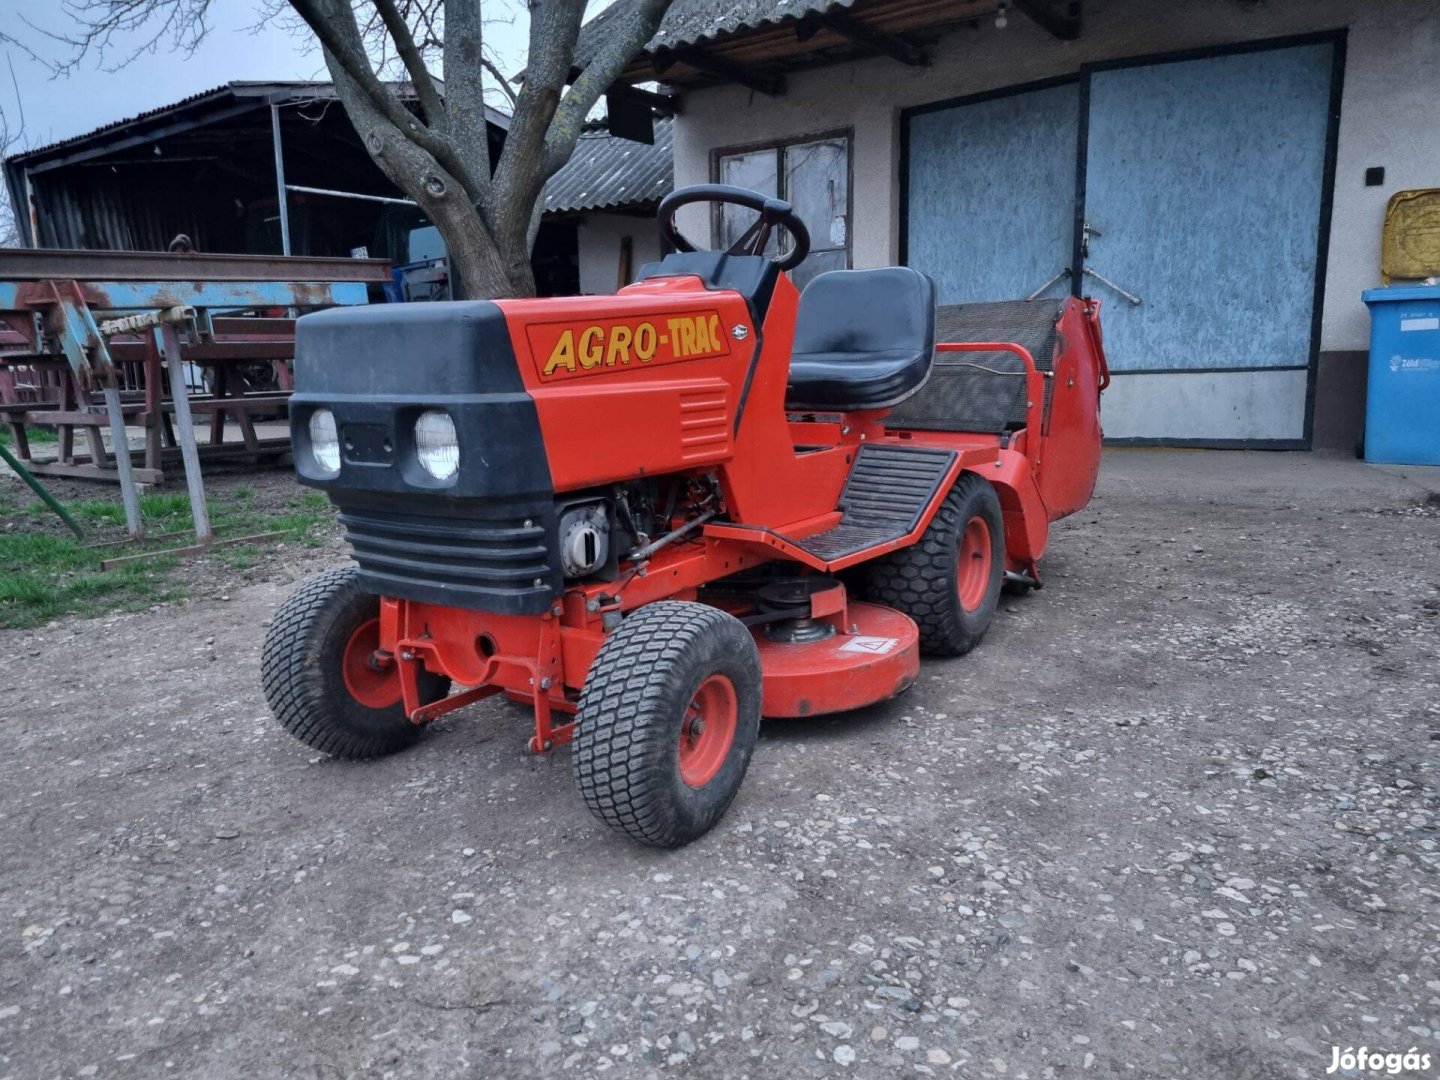 Agro trac fűnyíró traktor